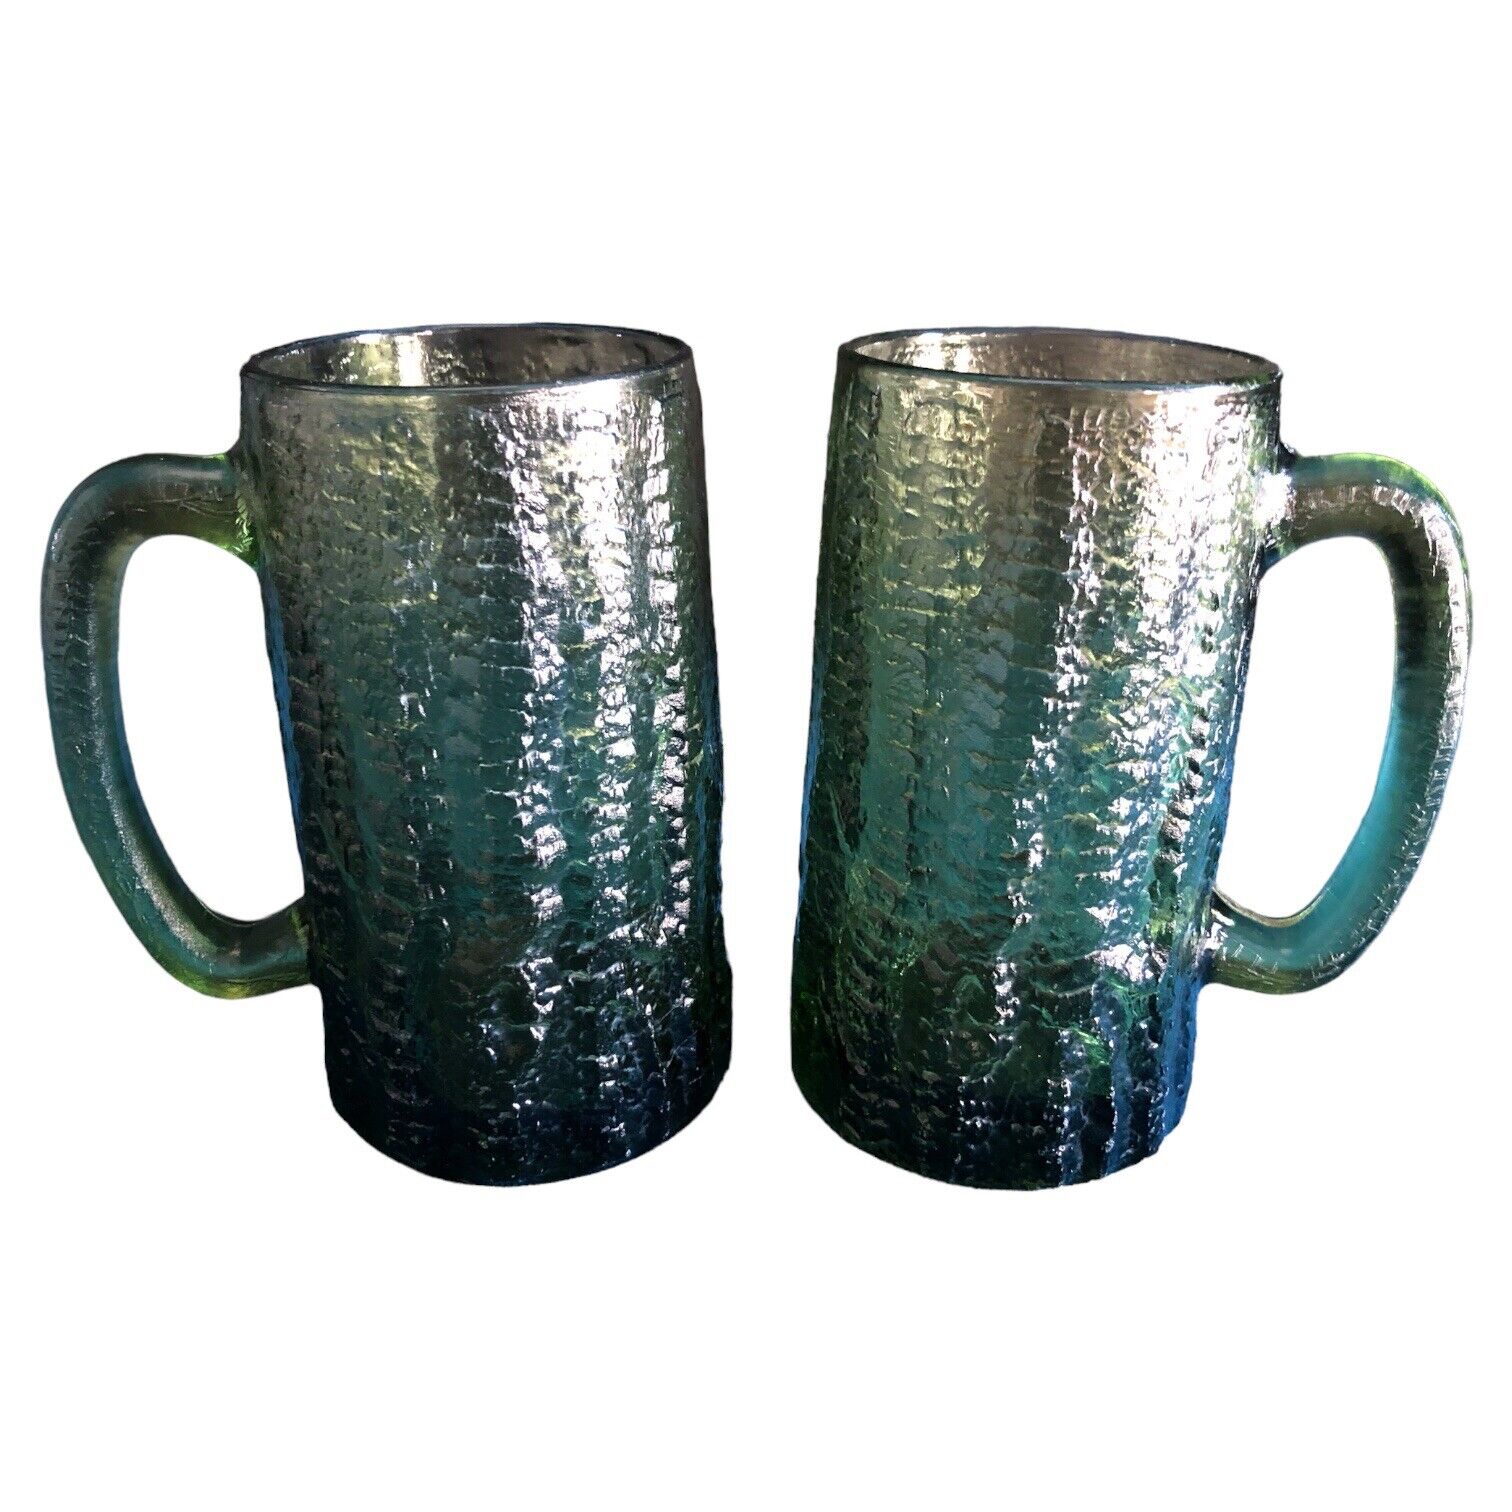 Vintage Textured Green Glass Handled Beer Mugs Retro Barware Set Of 2